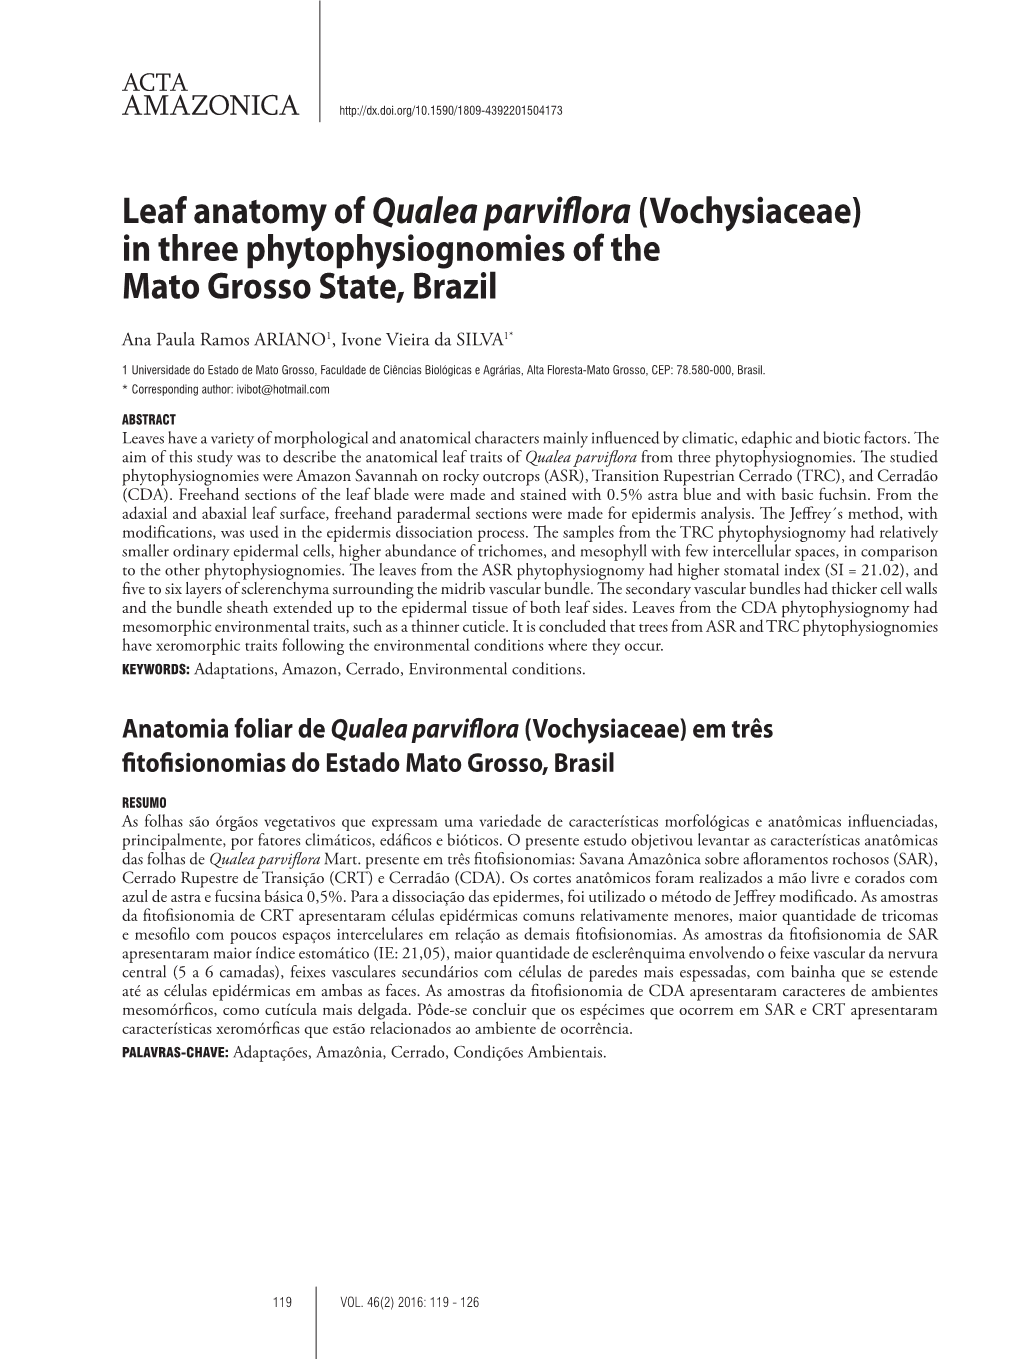 Leaf Anatomy of Qualea Parviflora(Vochysiaceae) in Three